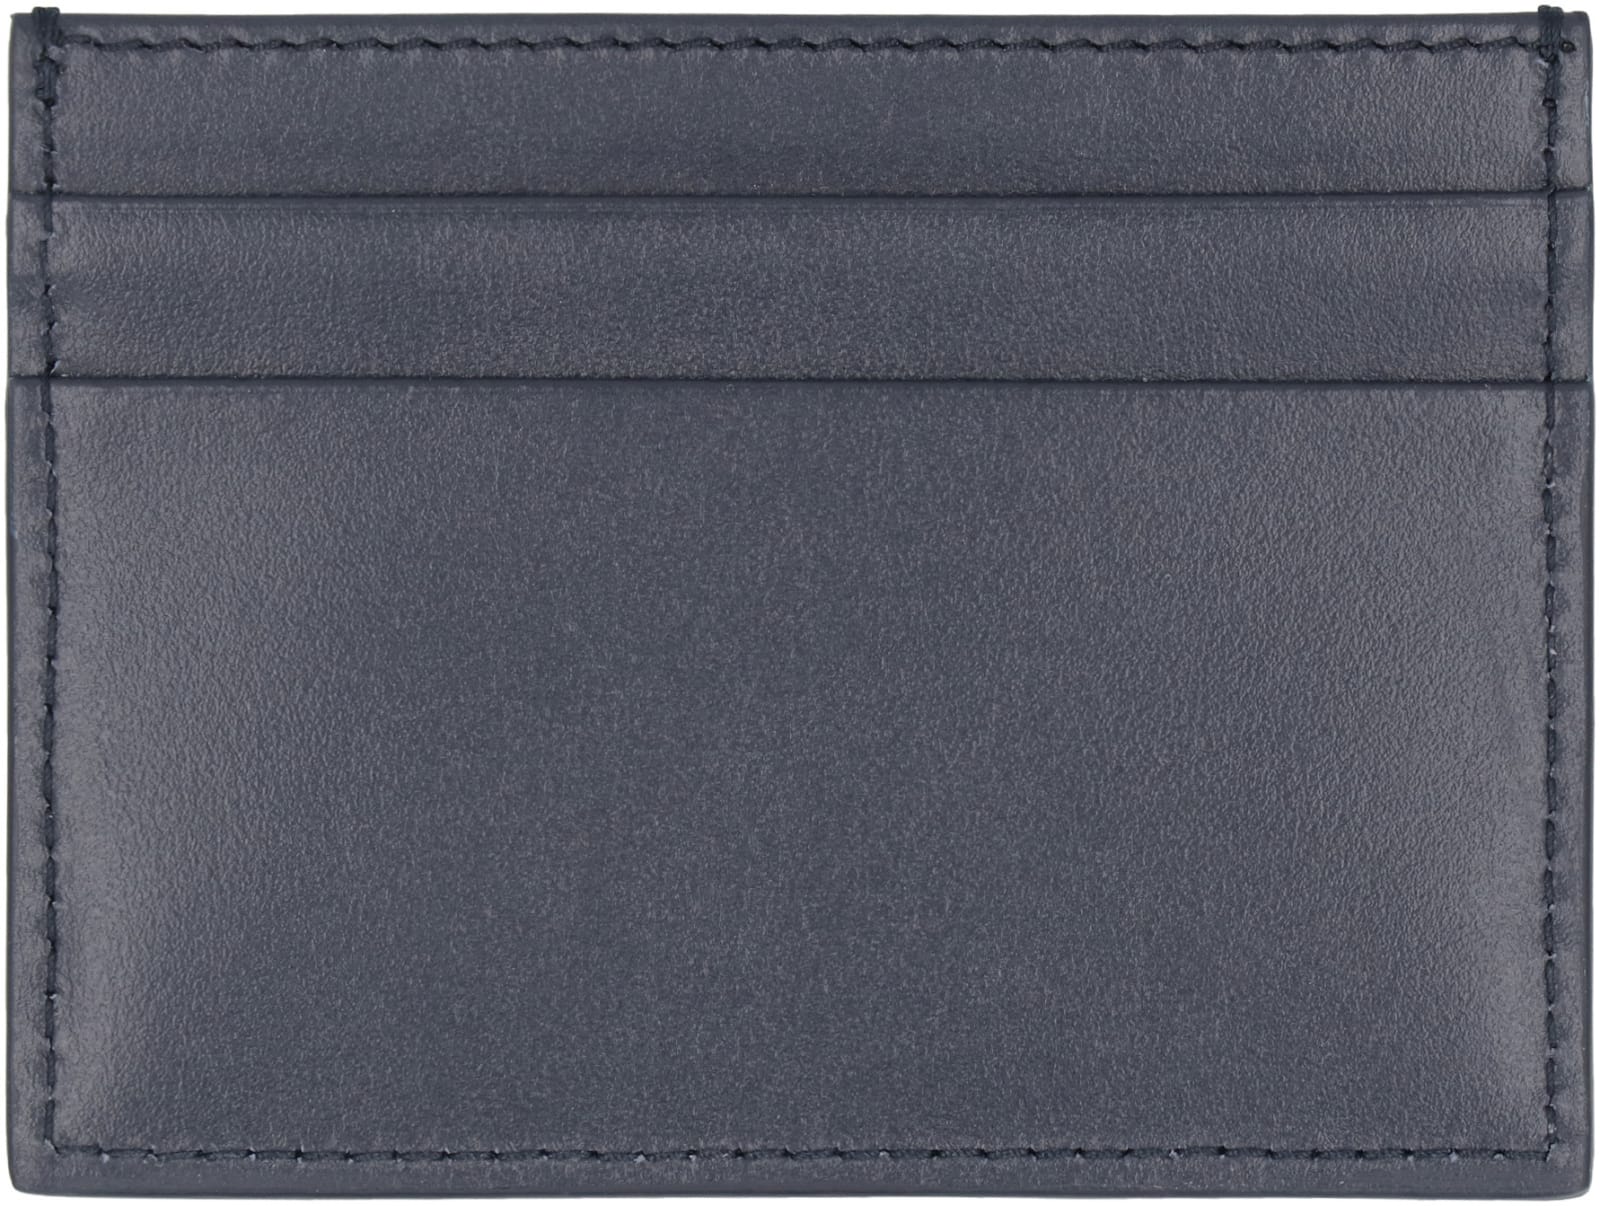 Shop Dolce & Gabbana Leather Card Holder In Blue